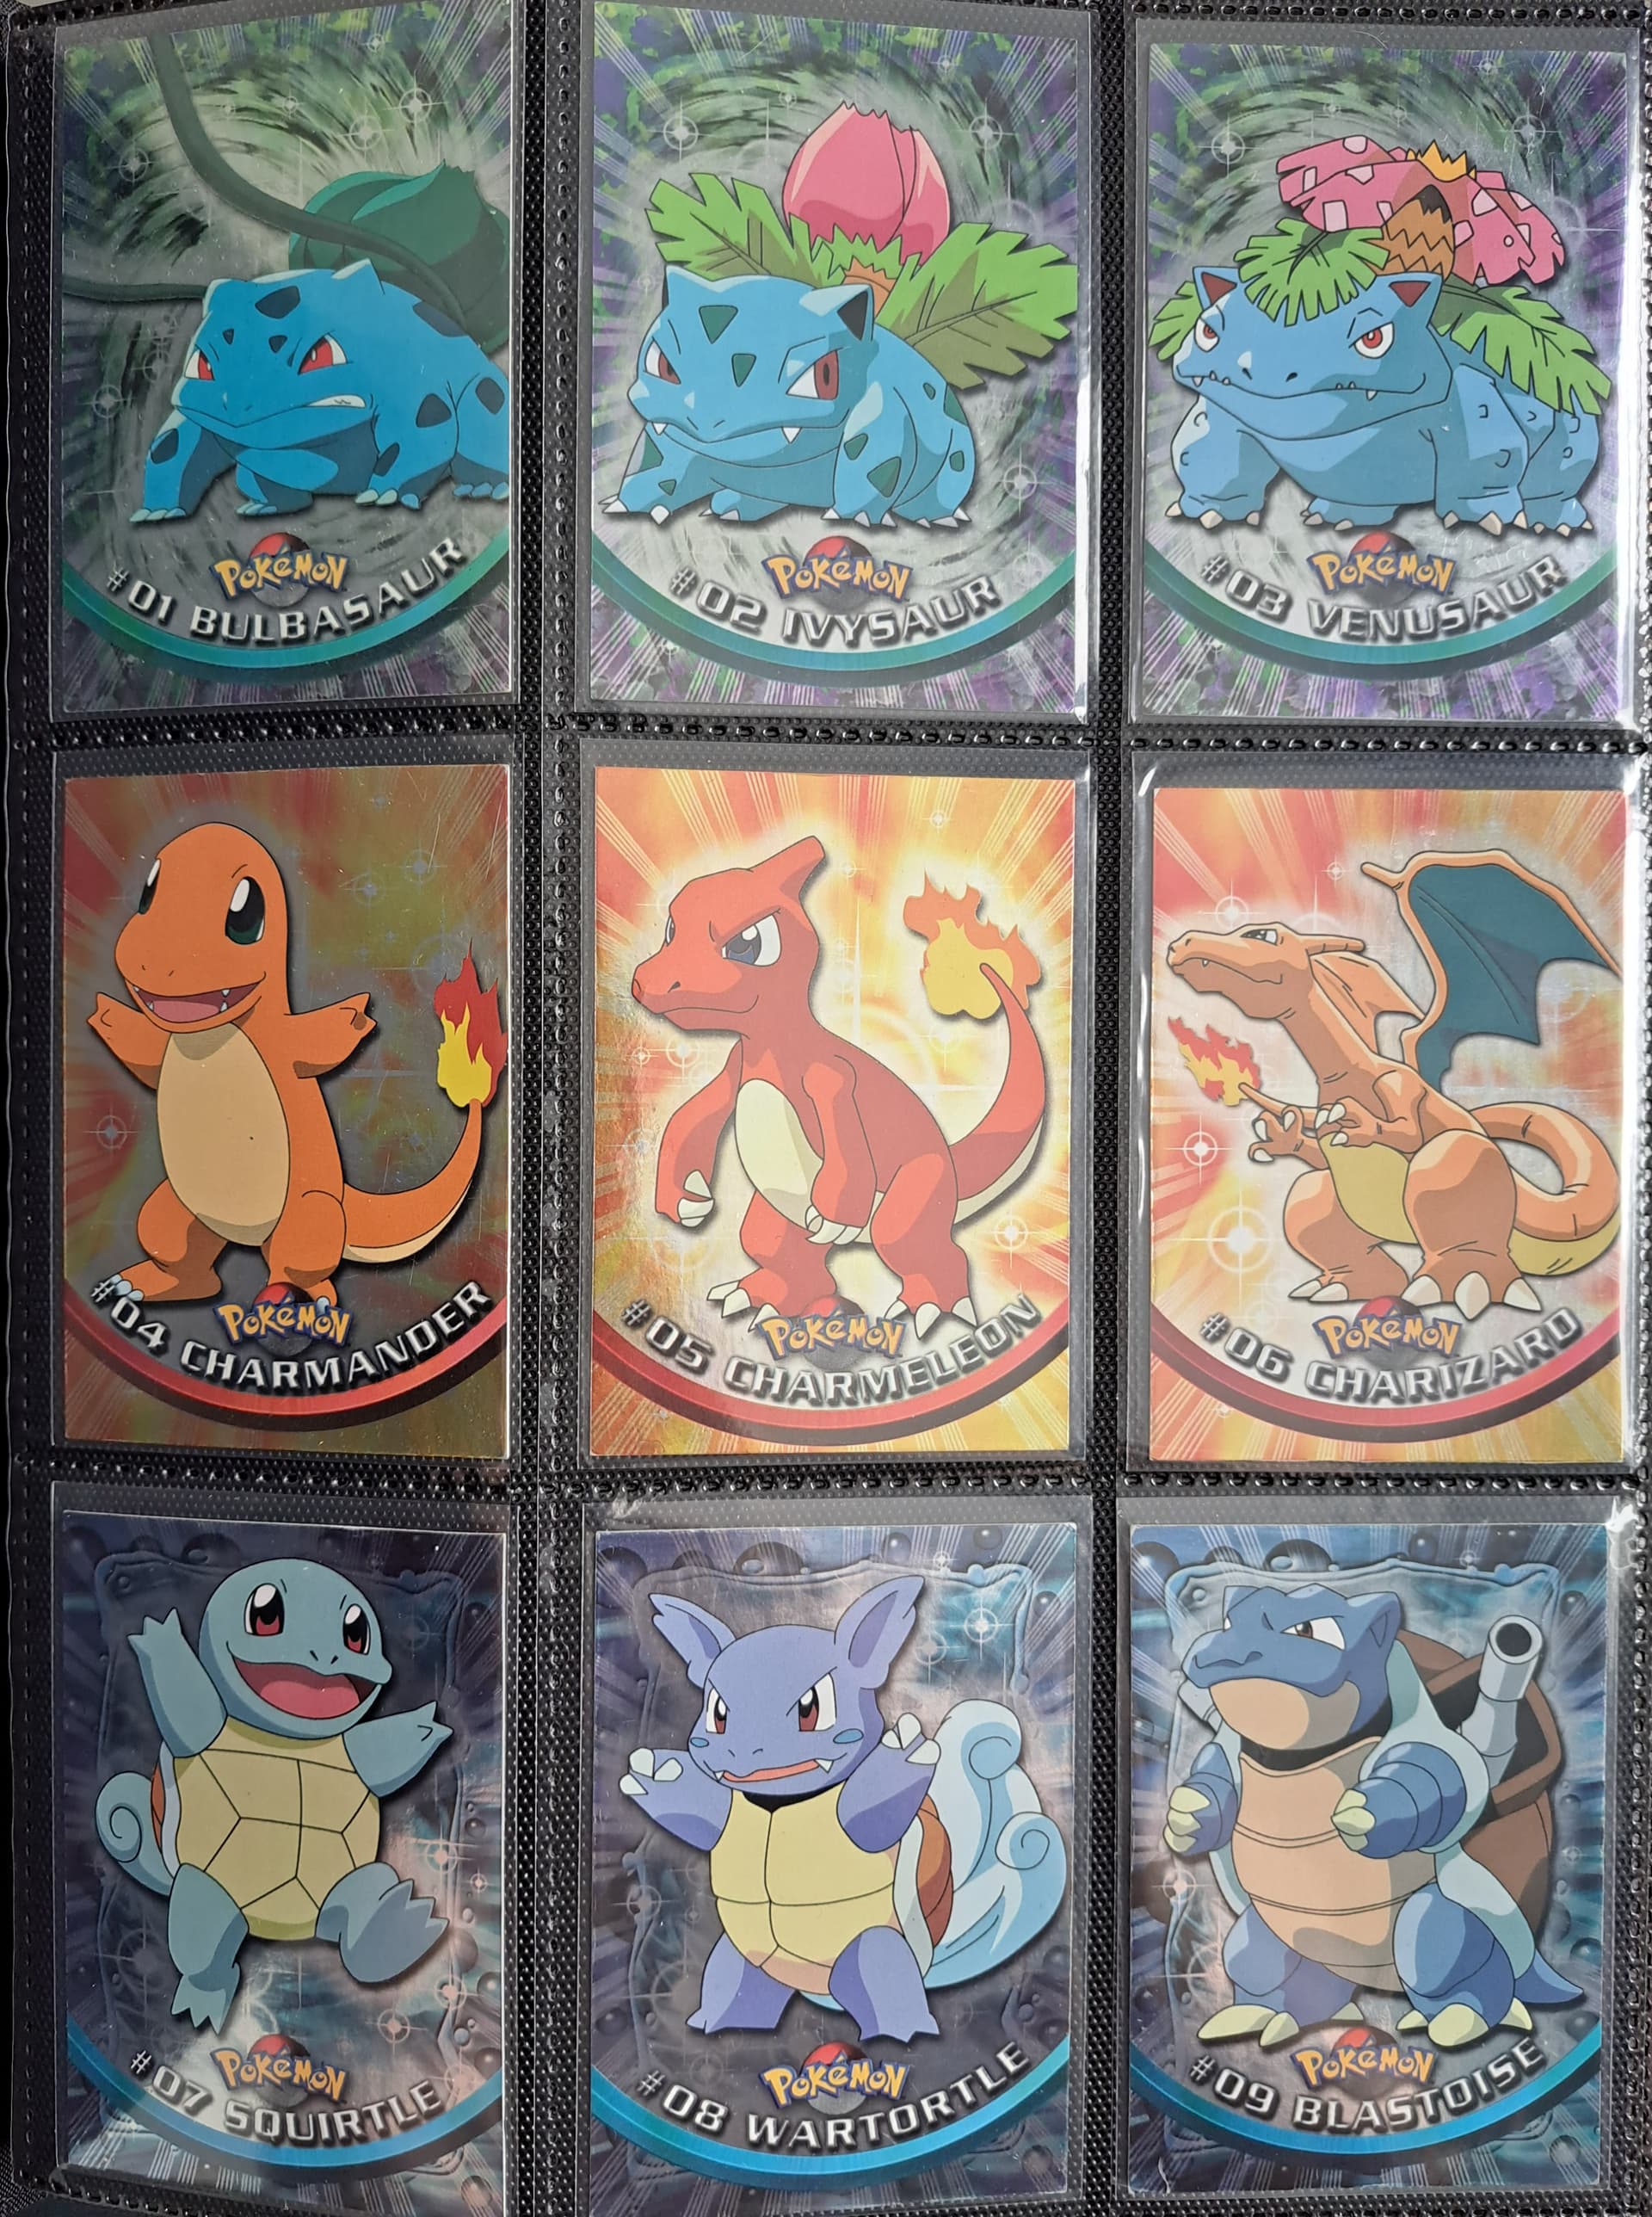 TOPPS Original 151 Series 1-3 Pokémon Complete Set